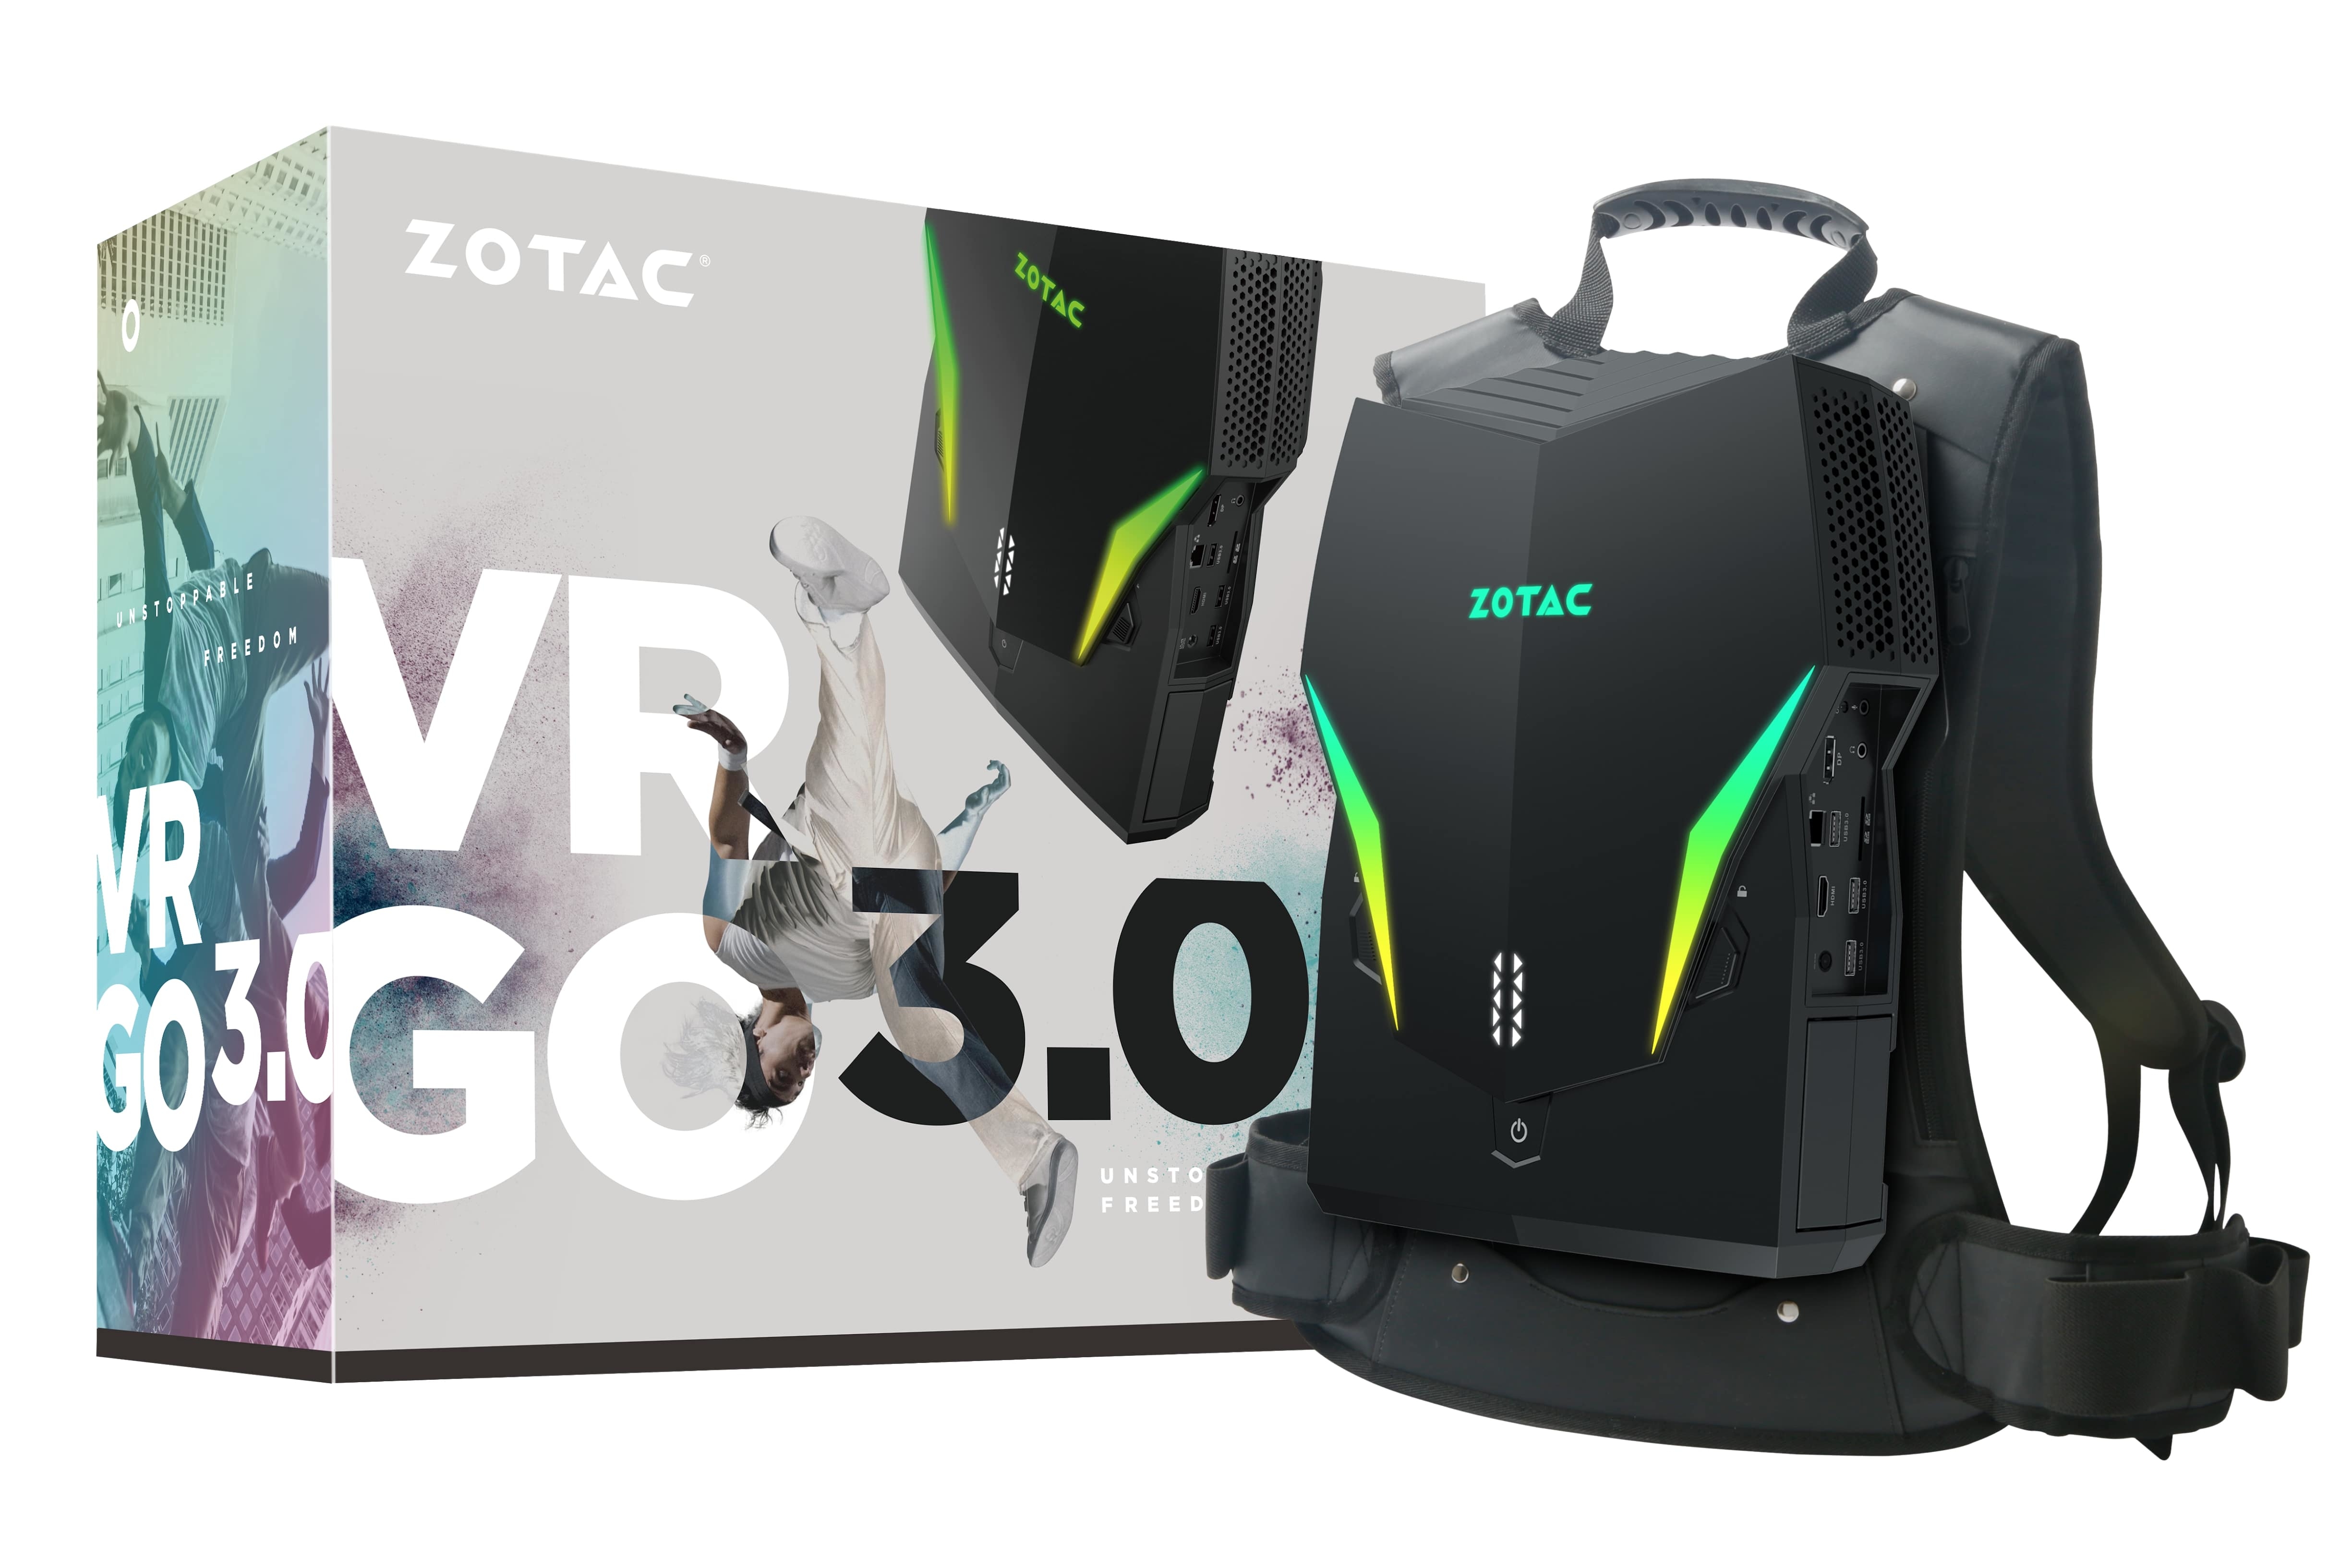 VR GO 3.0 with Windows 10 ZOTAC